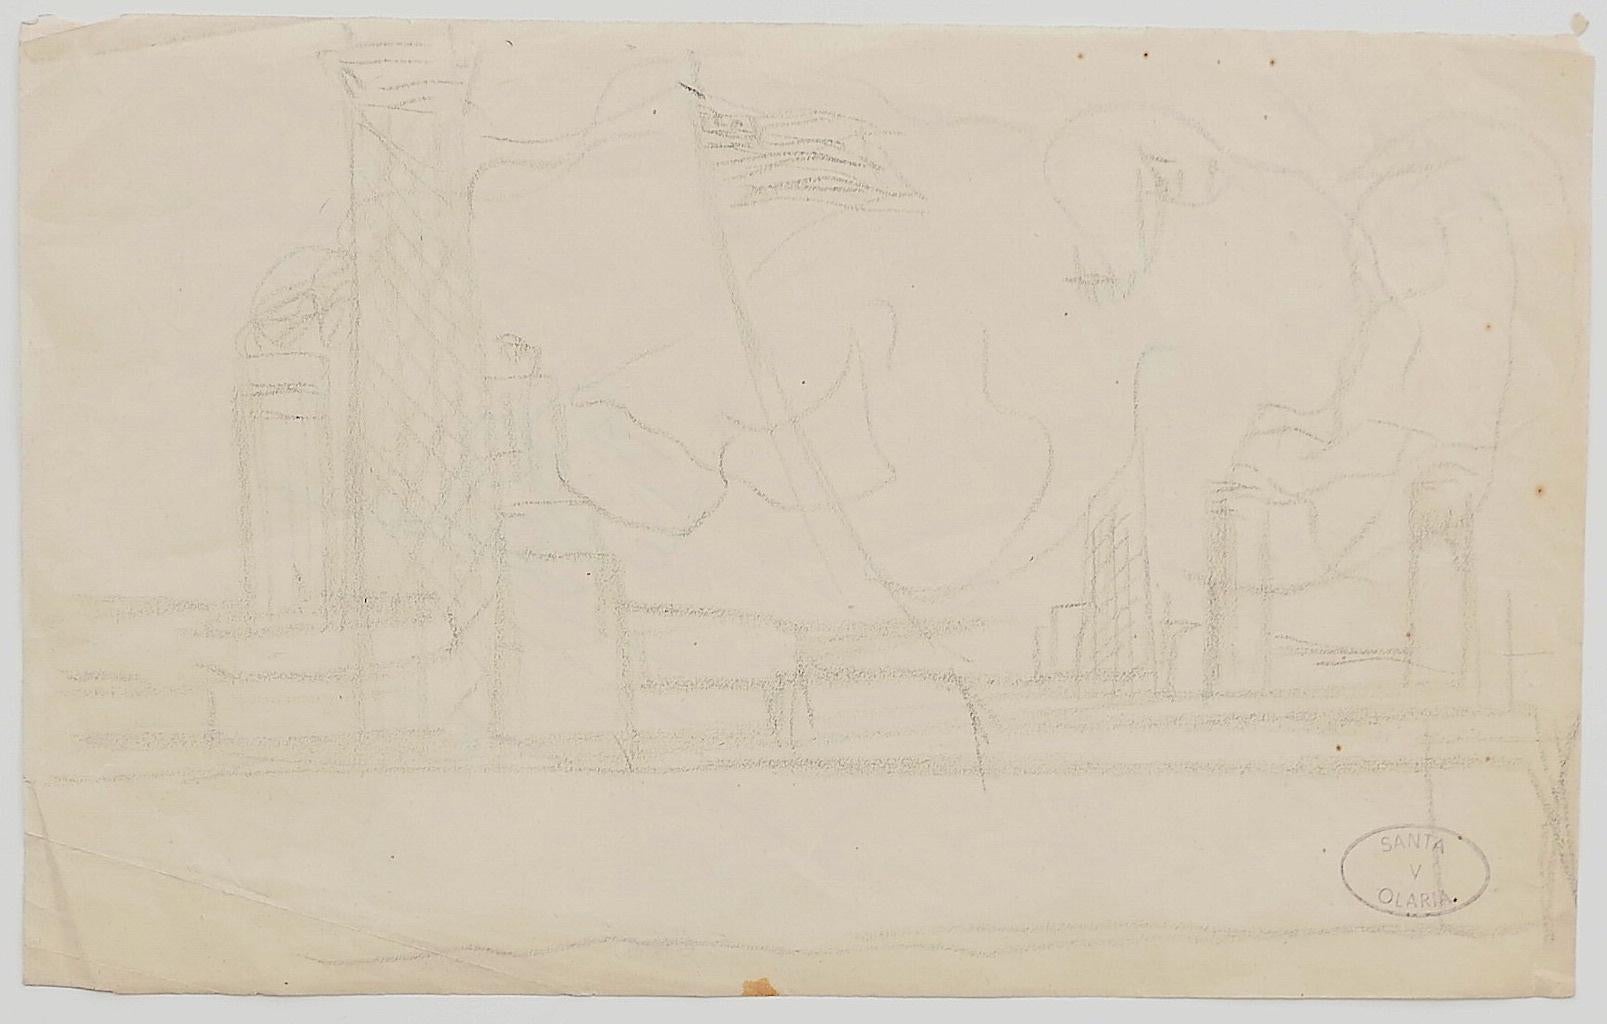 Unknown Landscape Art - Bridge - Pencil on Paper - 20th Century